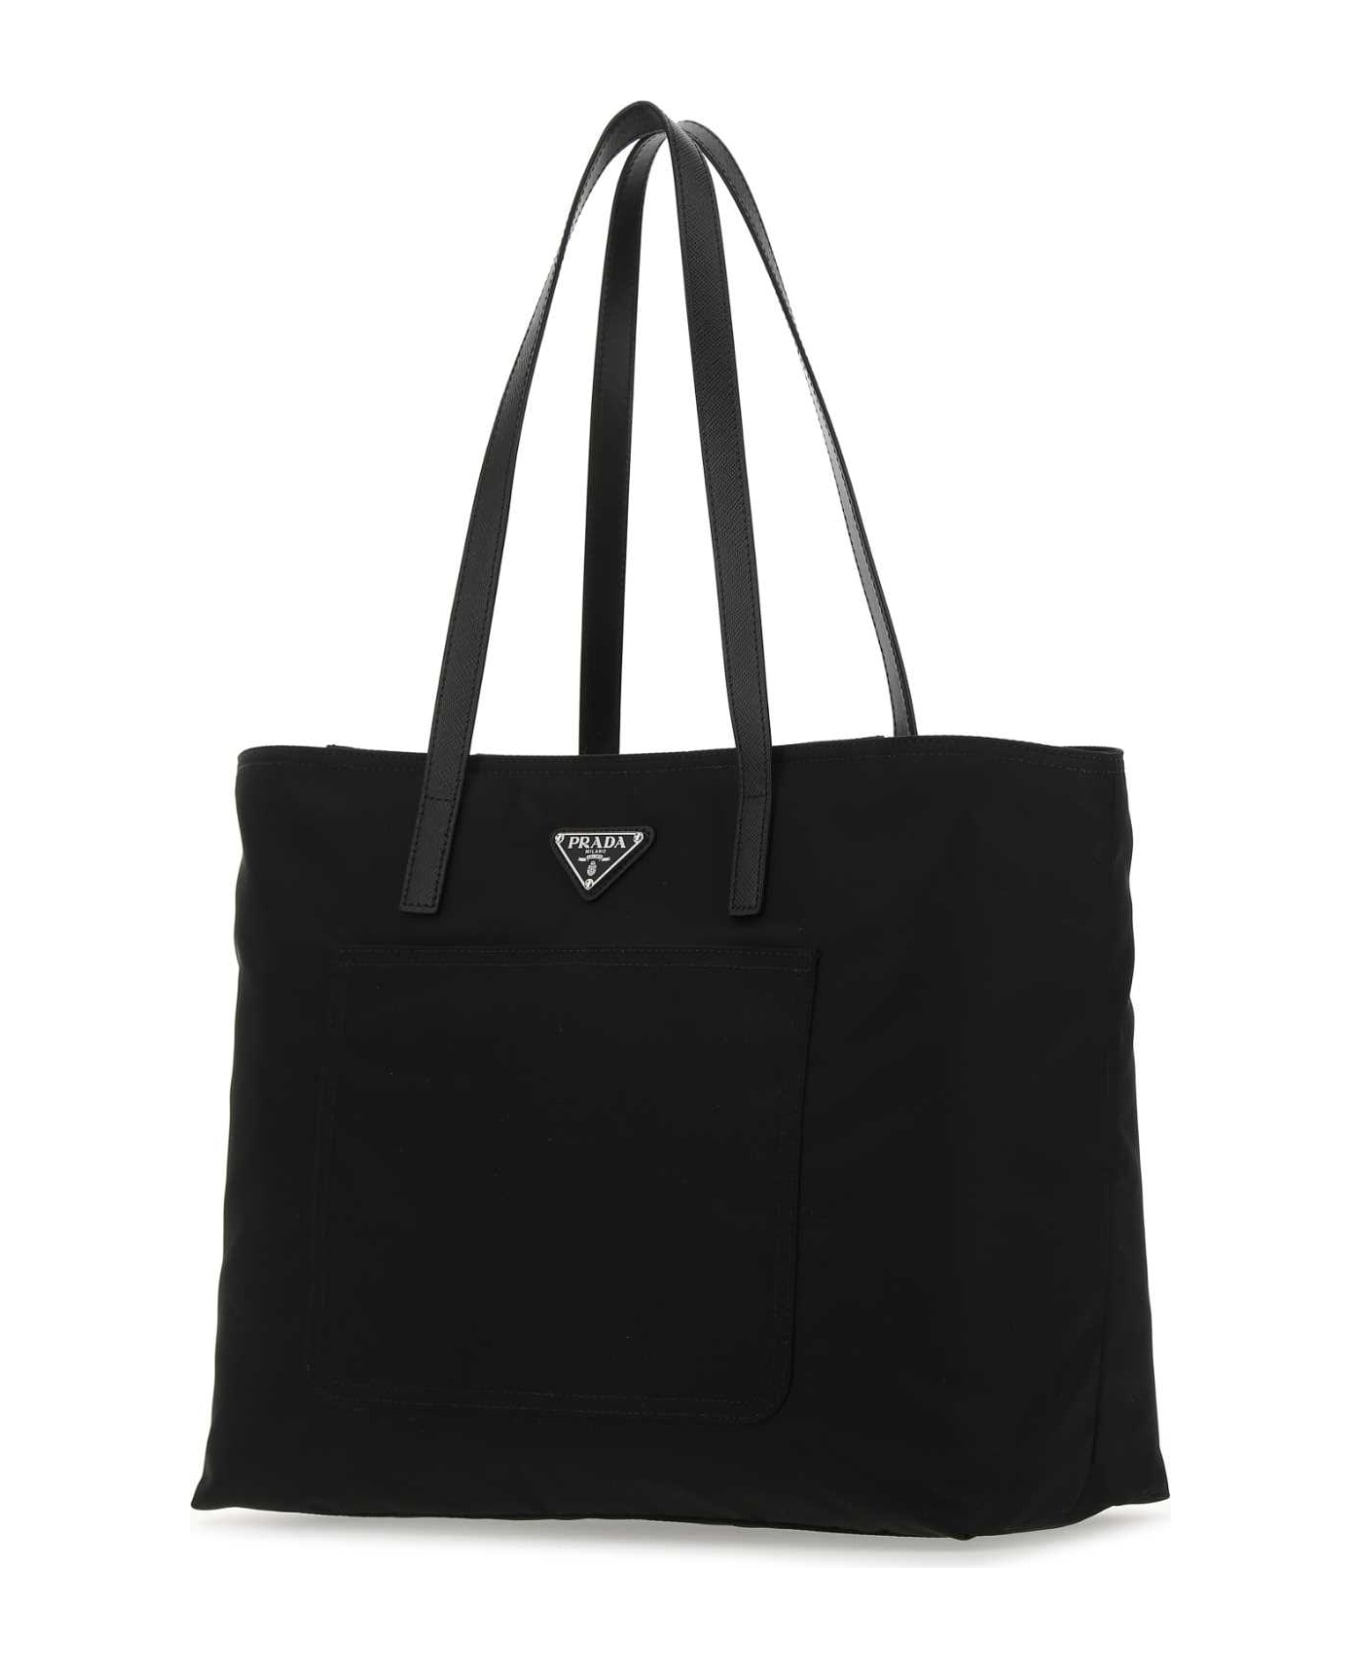 Prada Black Nylon Shopping Bag - F0002 トートバッグ